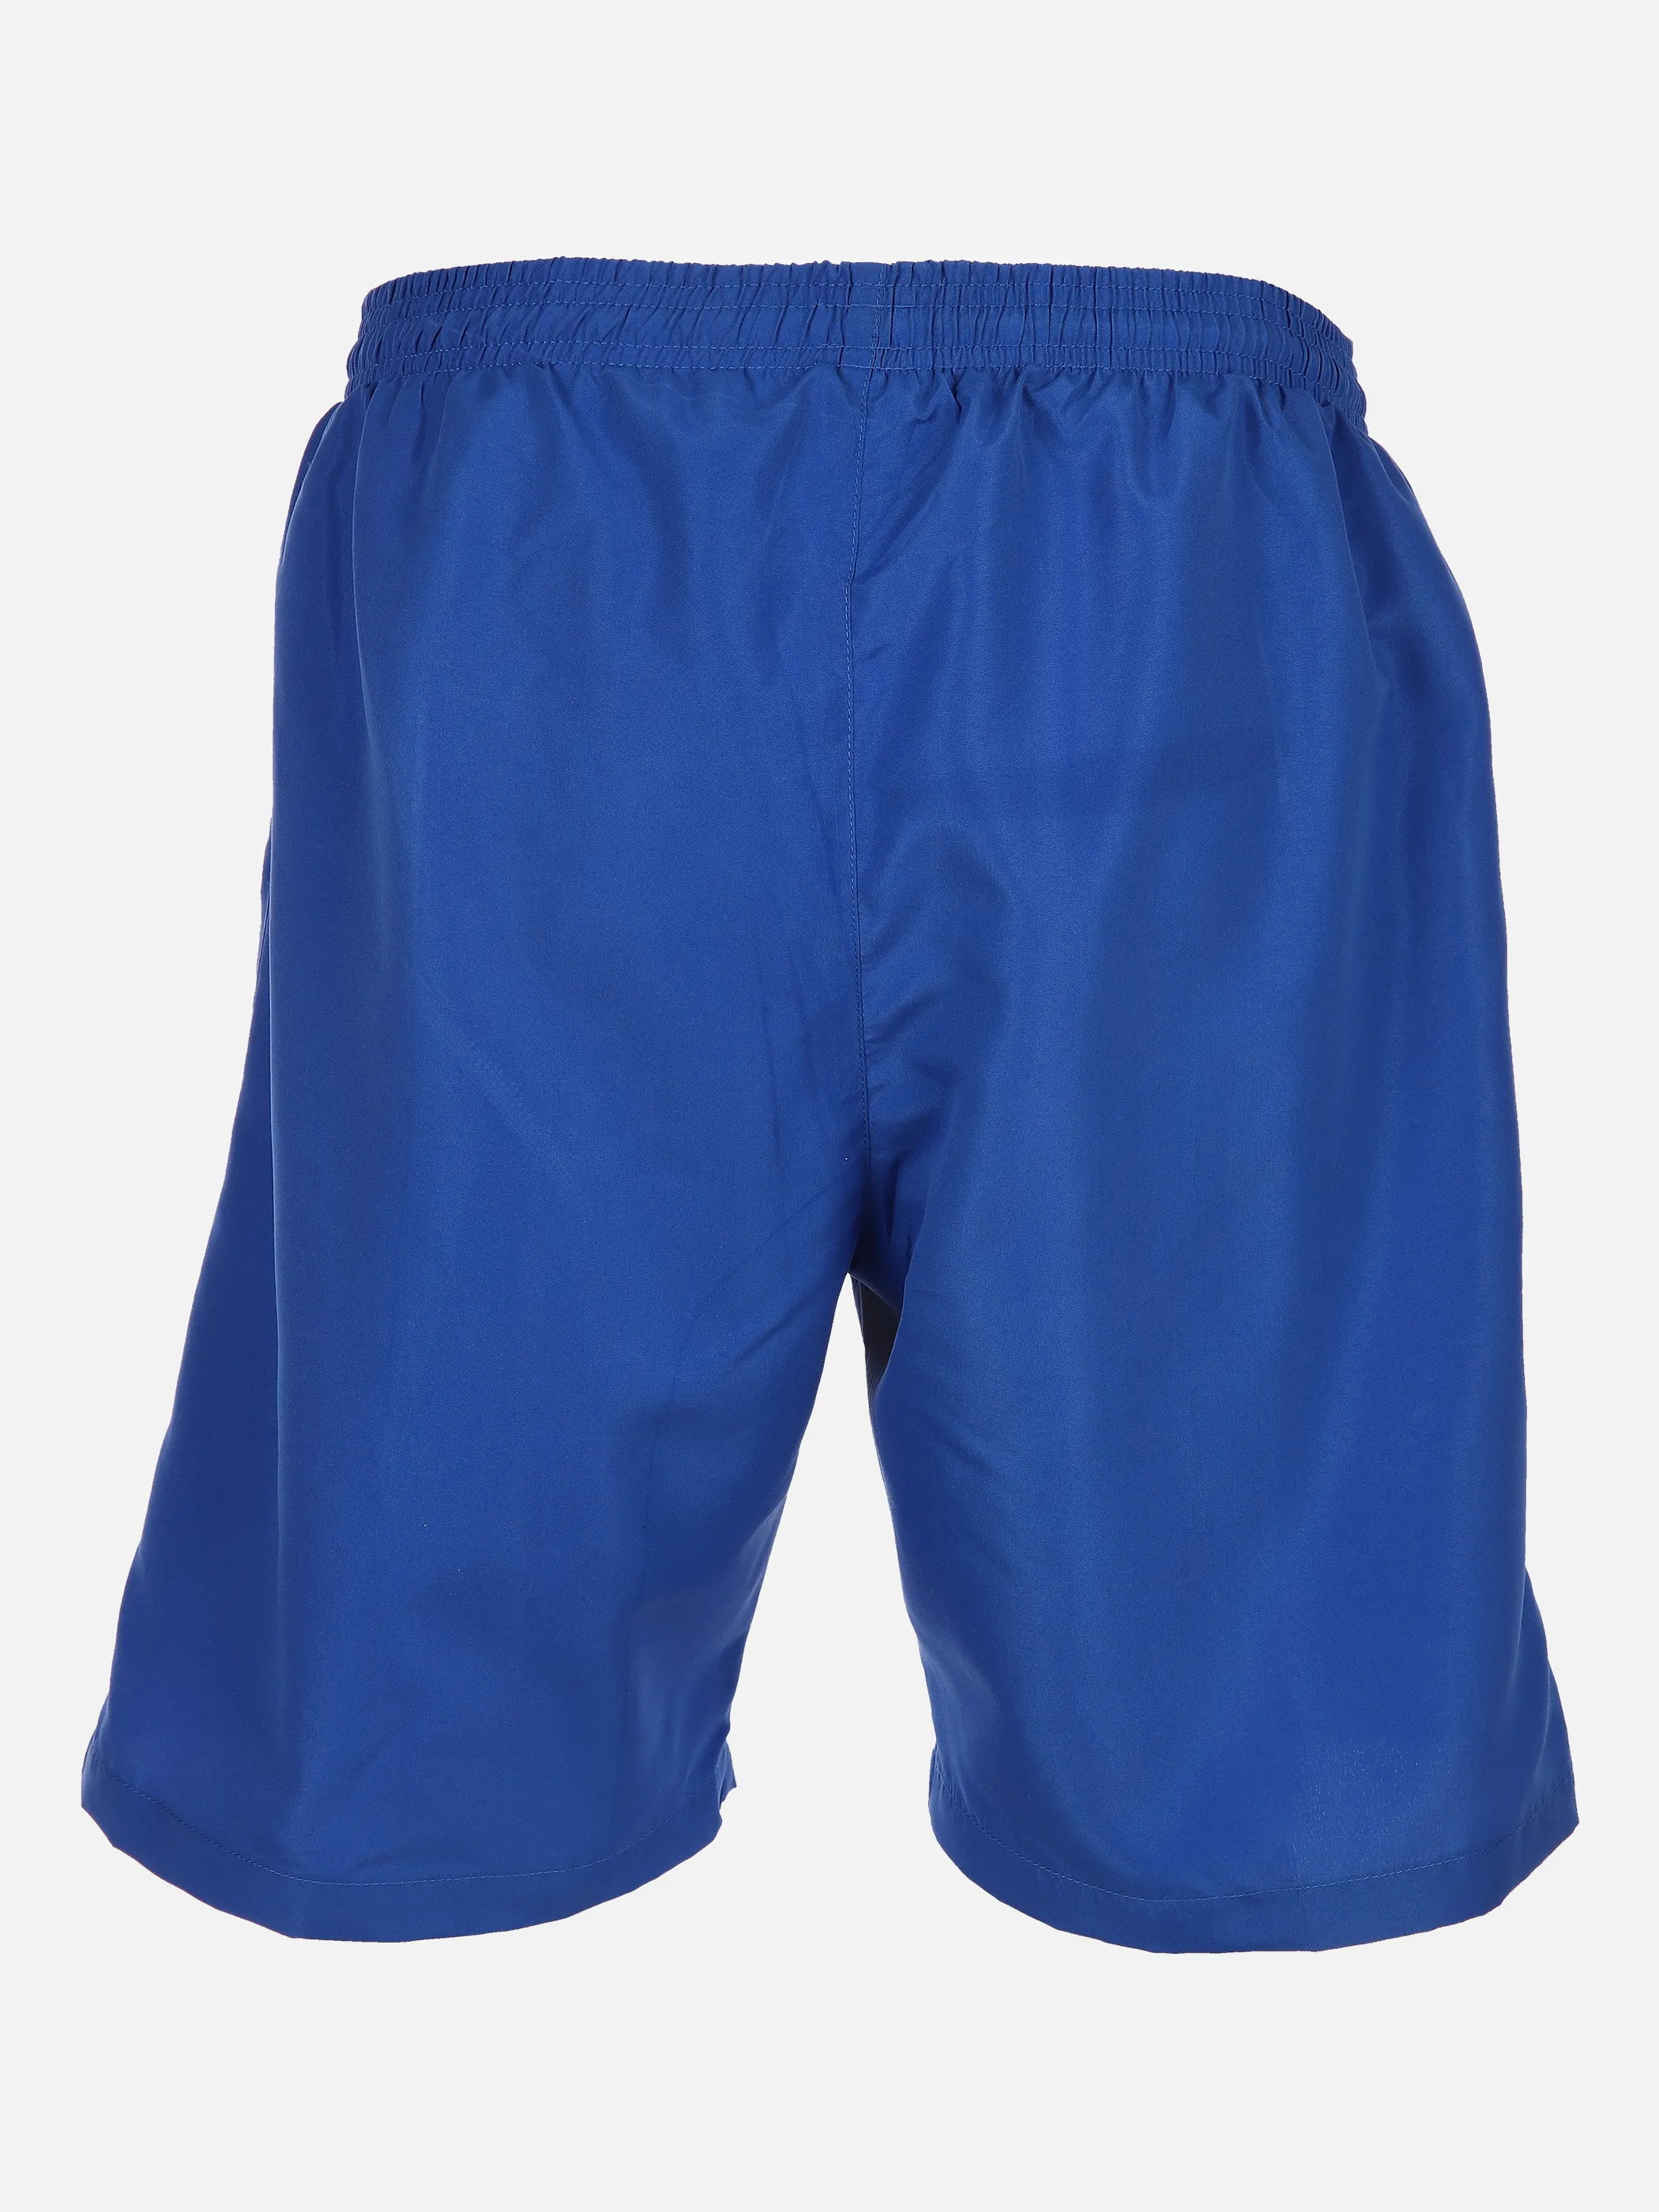 Grinario Sports He-Micro-Short Blau 839802 ROYAL/WHIT 2